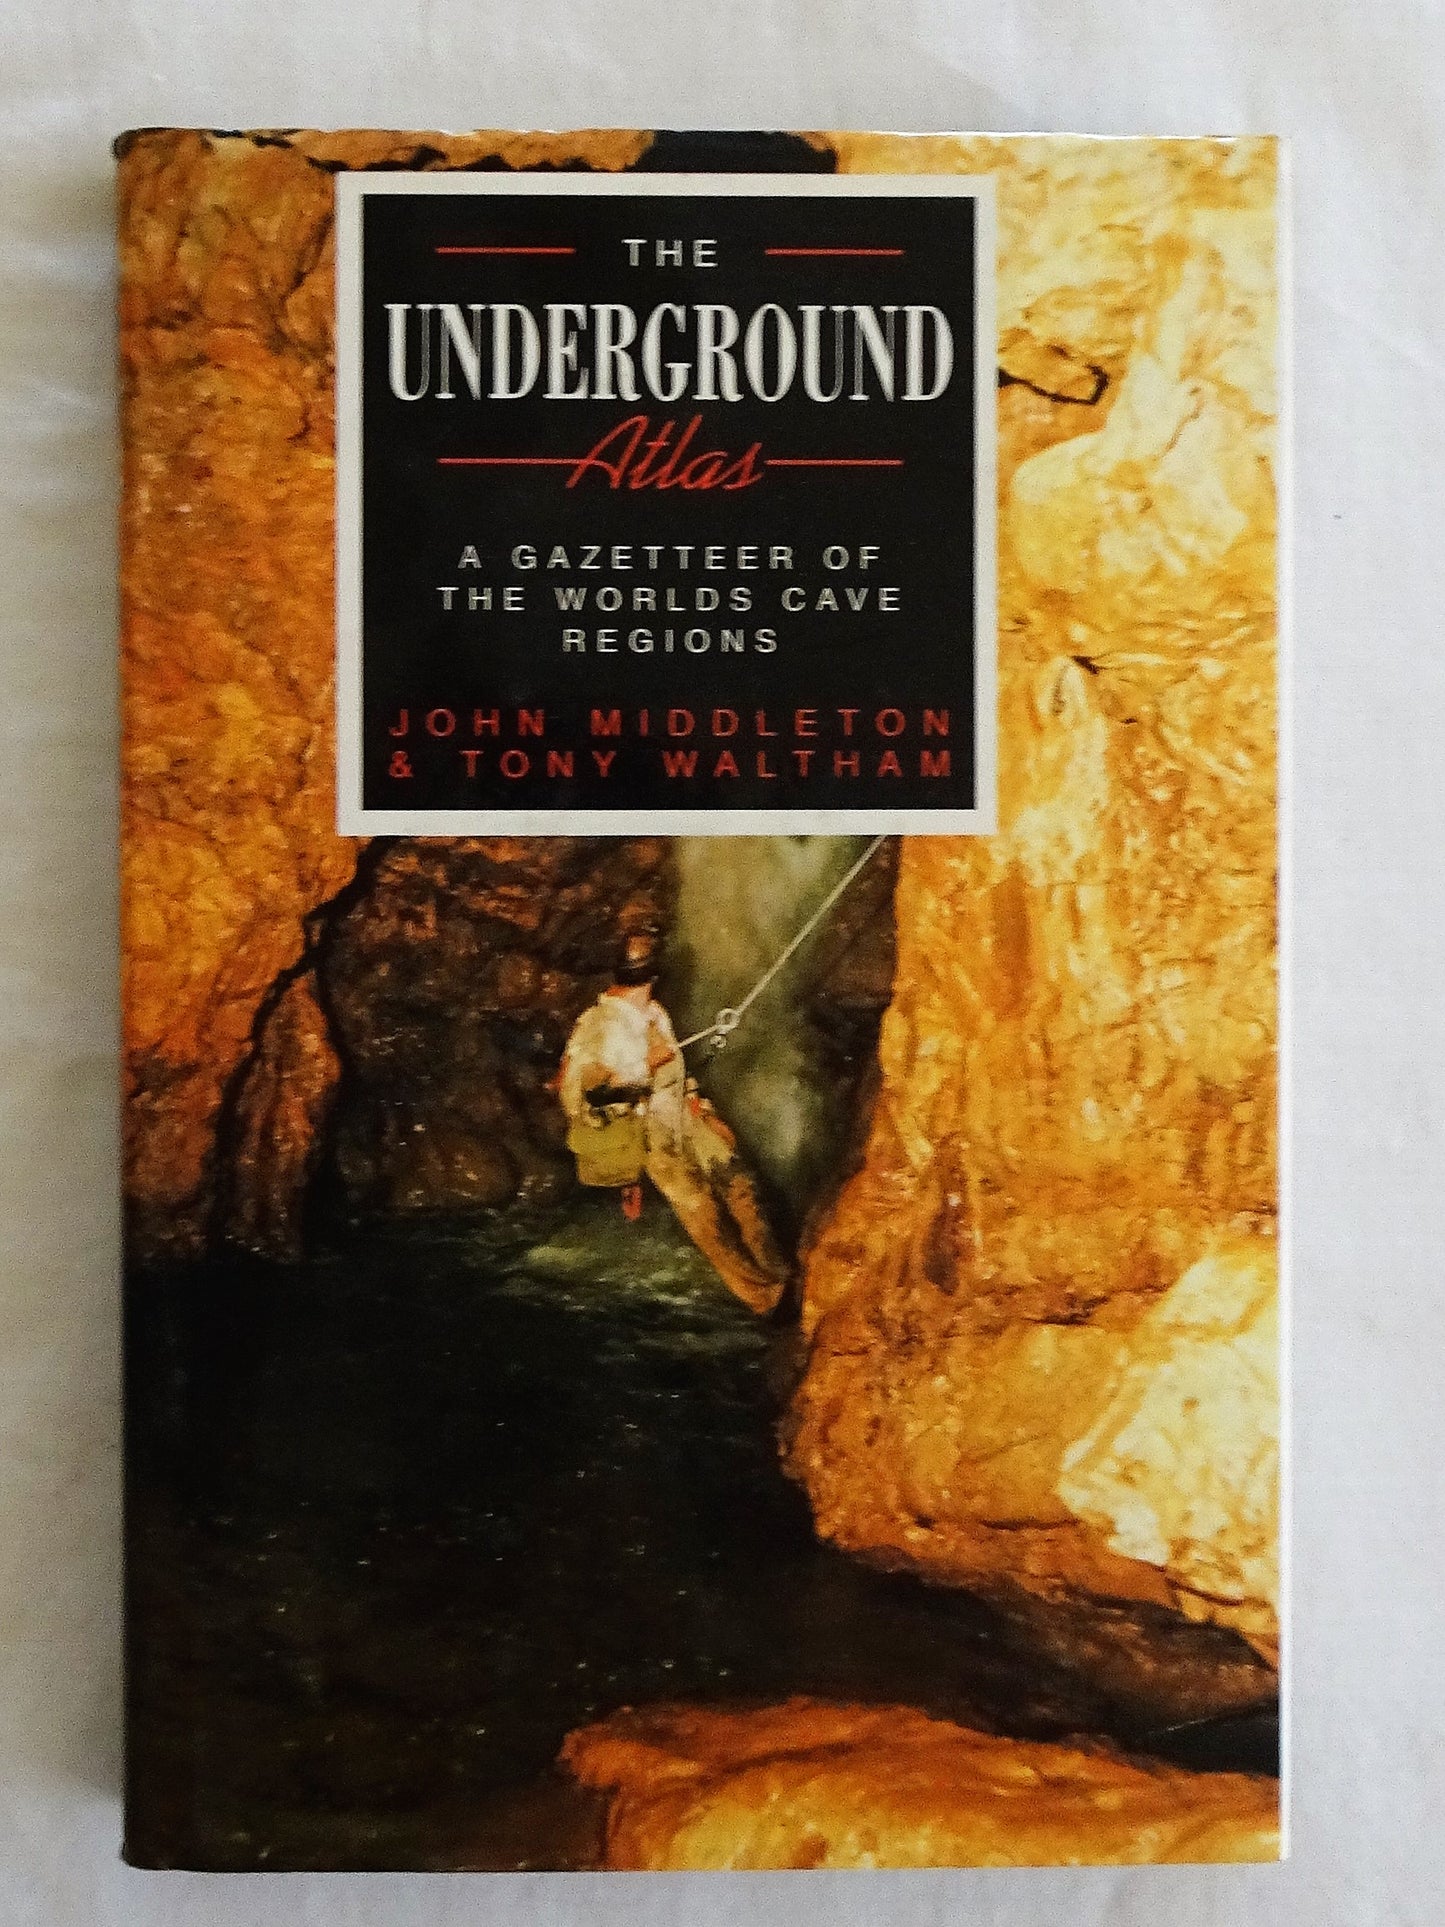 The Underground Atlas by John Middleton & Tony Waltham